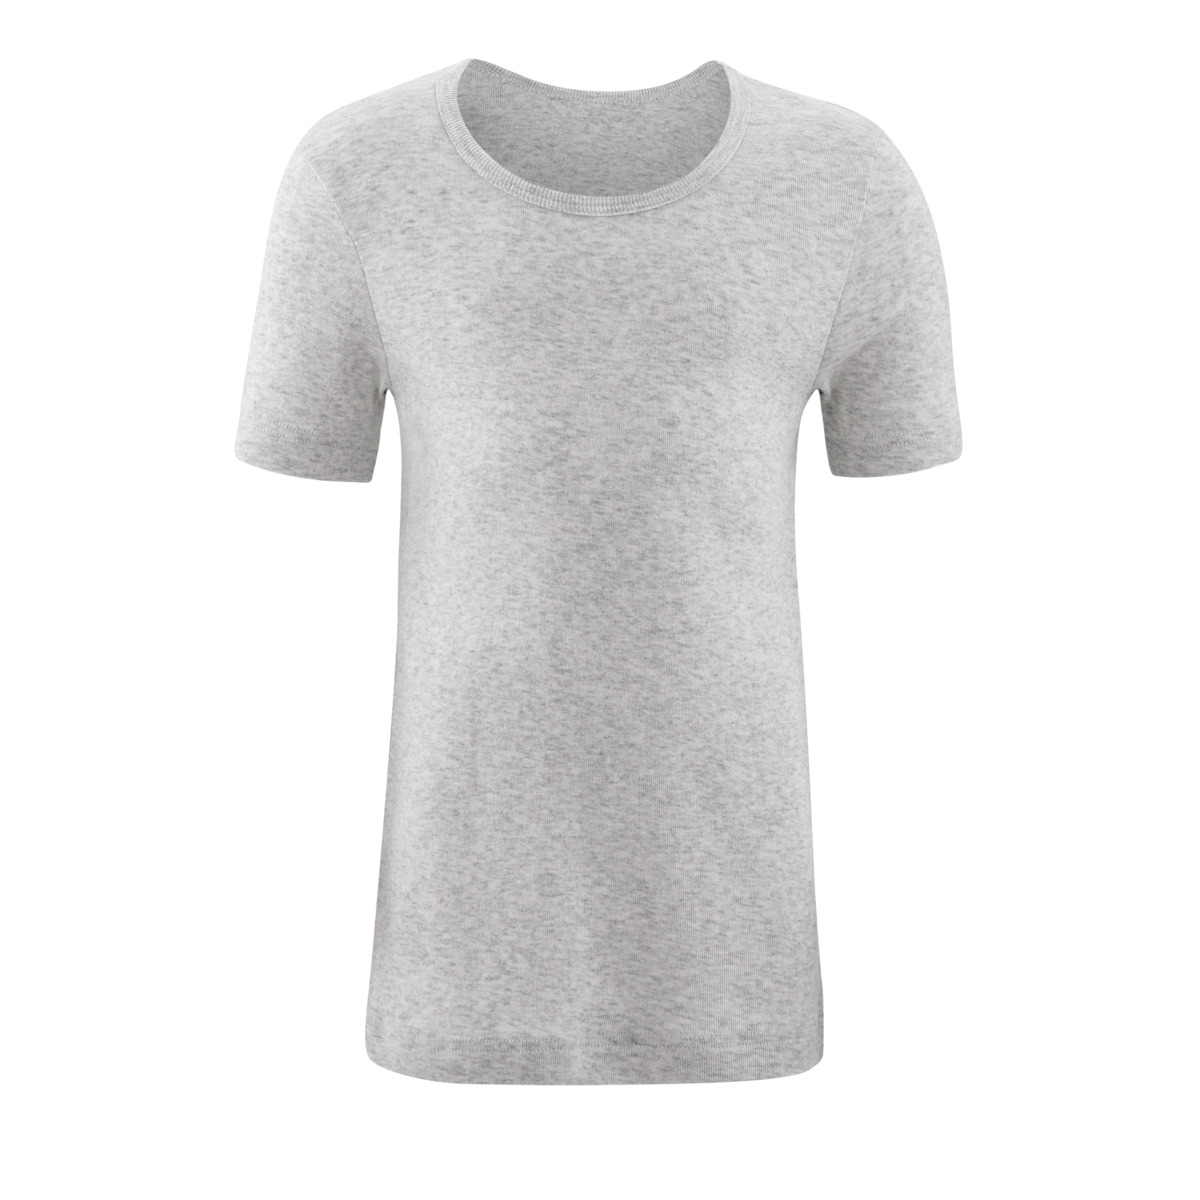 Grey Short-sleeved shirt, GOAT